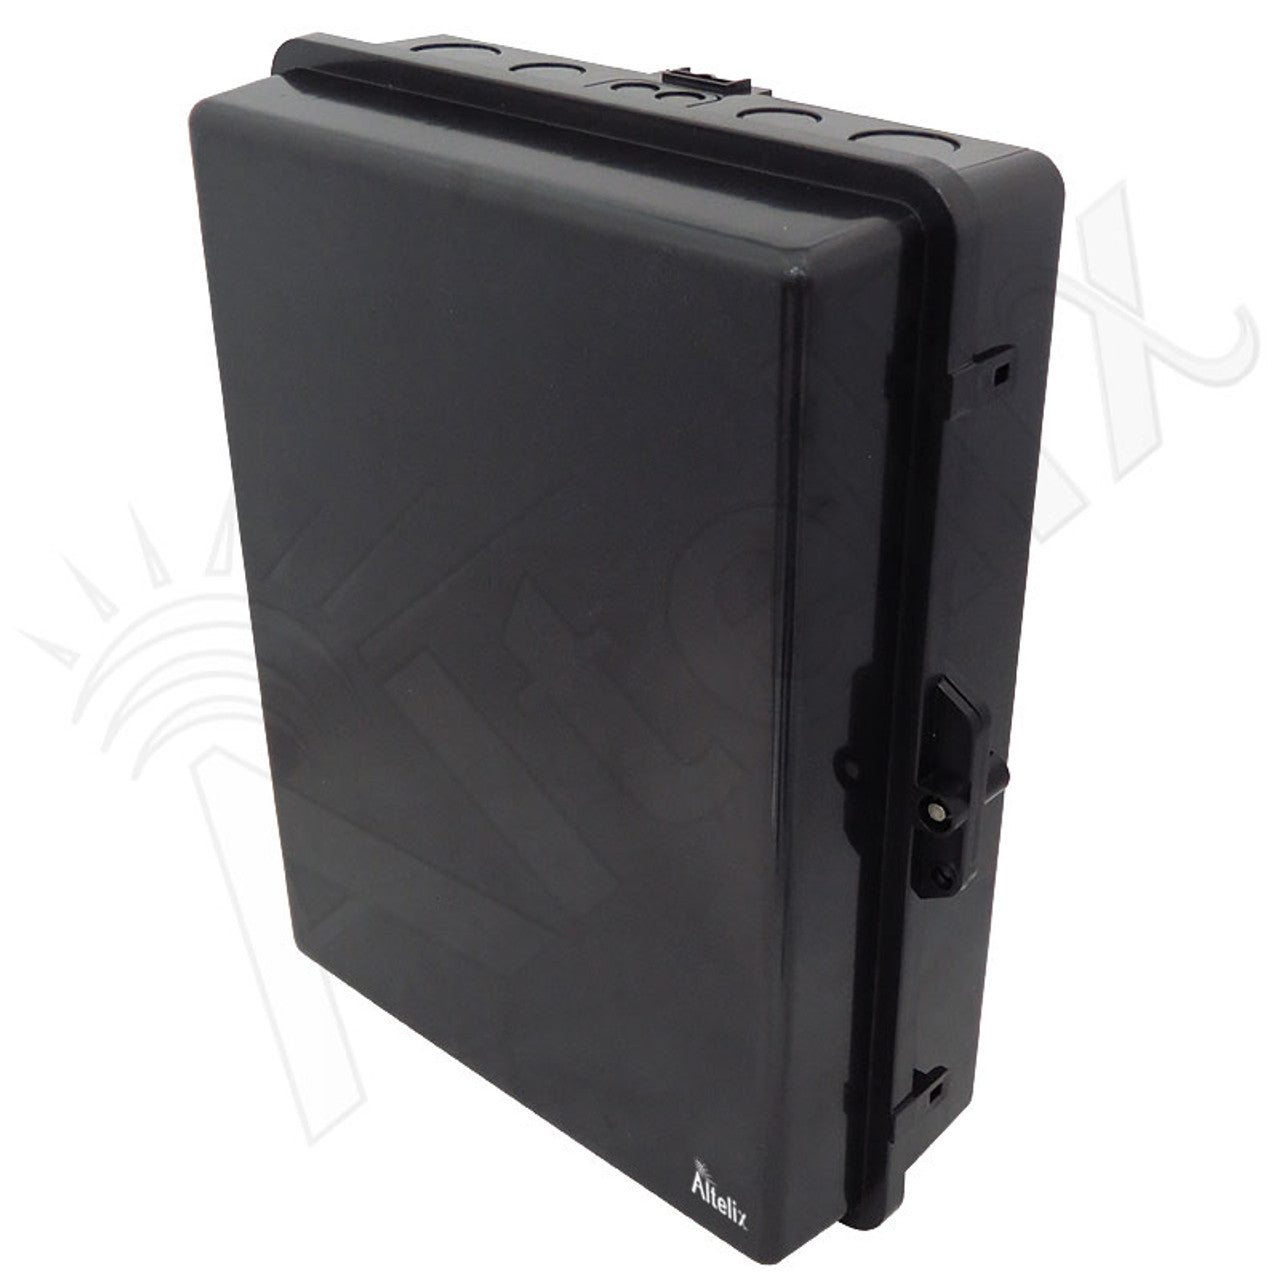 Buy black Altelix 17x14x6 PC + ABS Weatherproof Utility Box NEMA Enclosure with Heavy Duty Pole Mount Kit